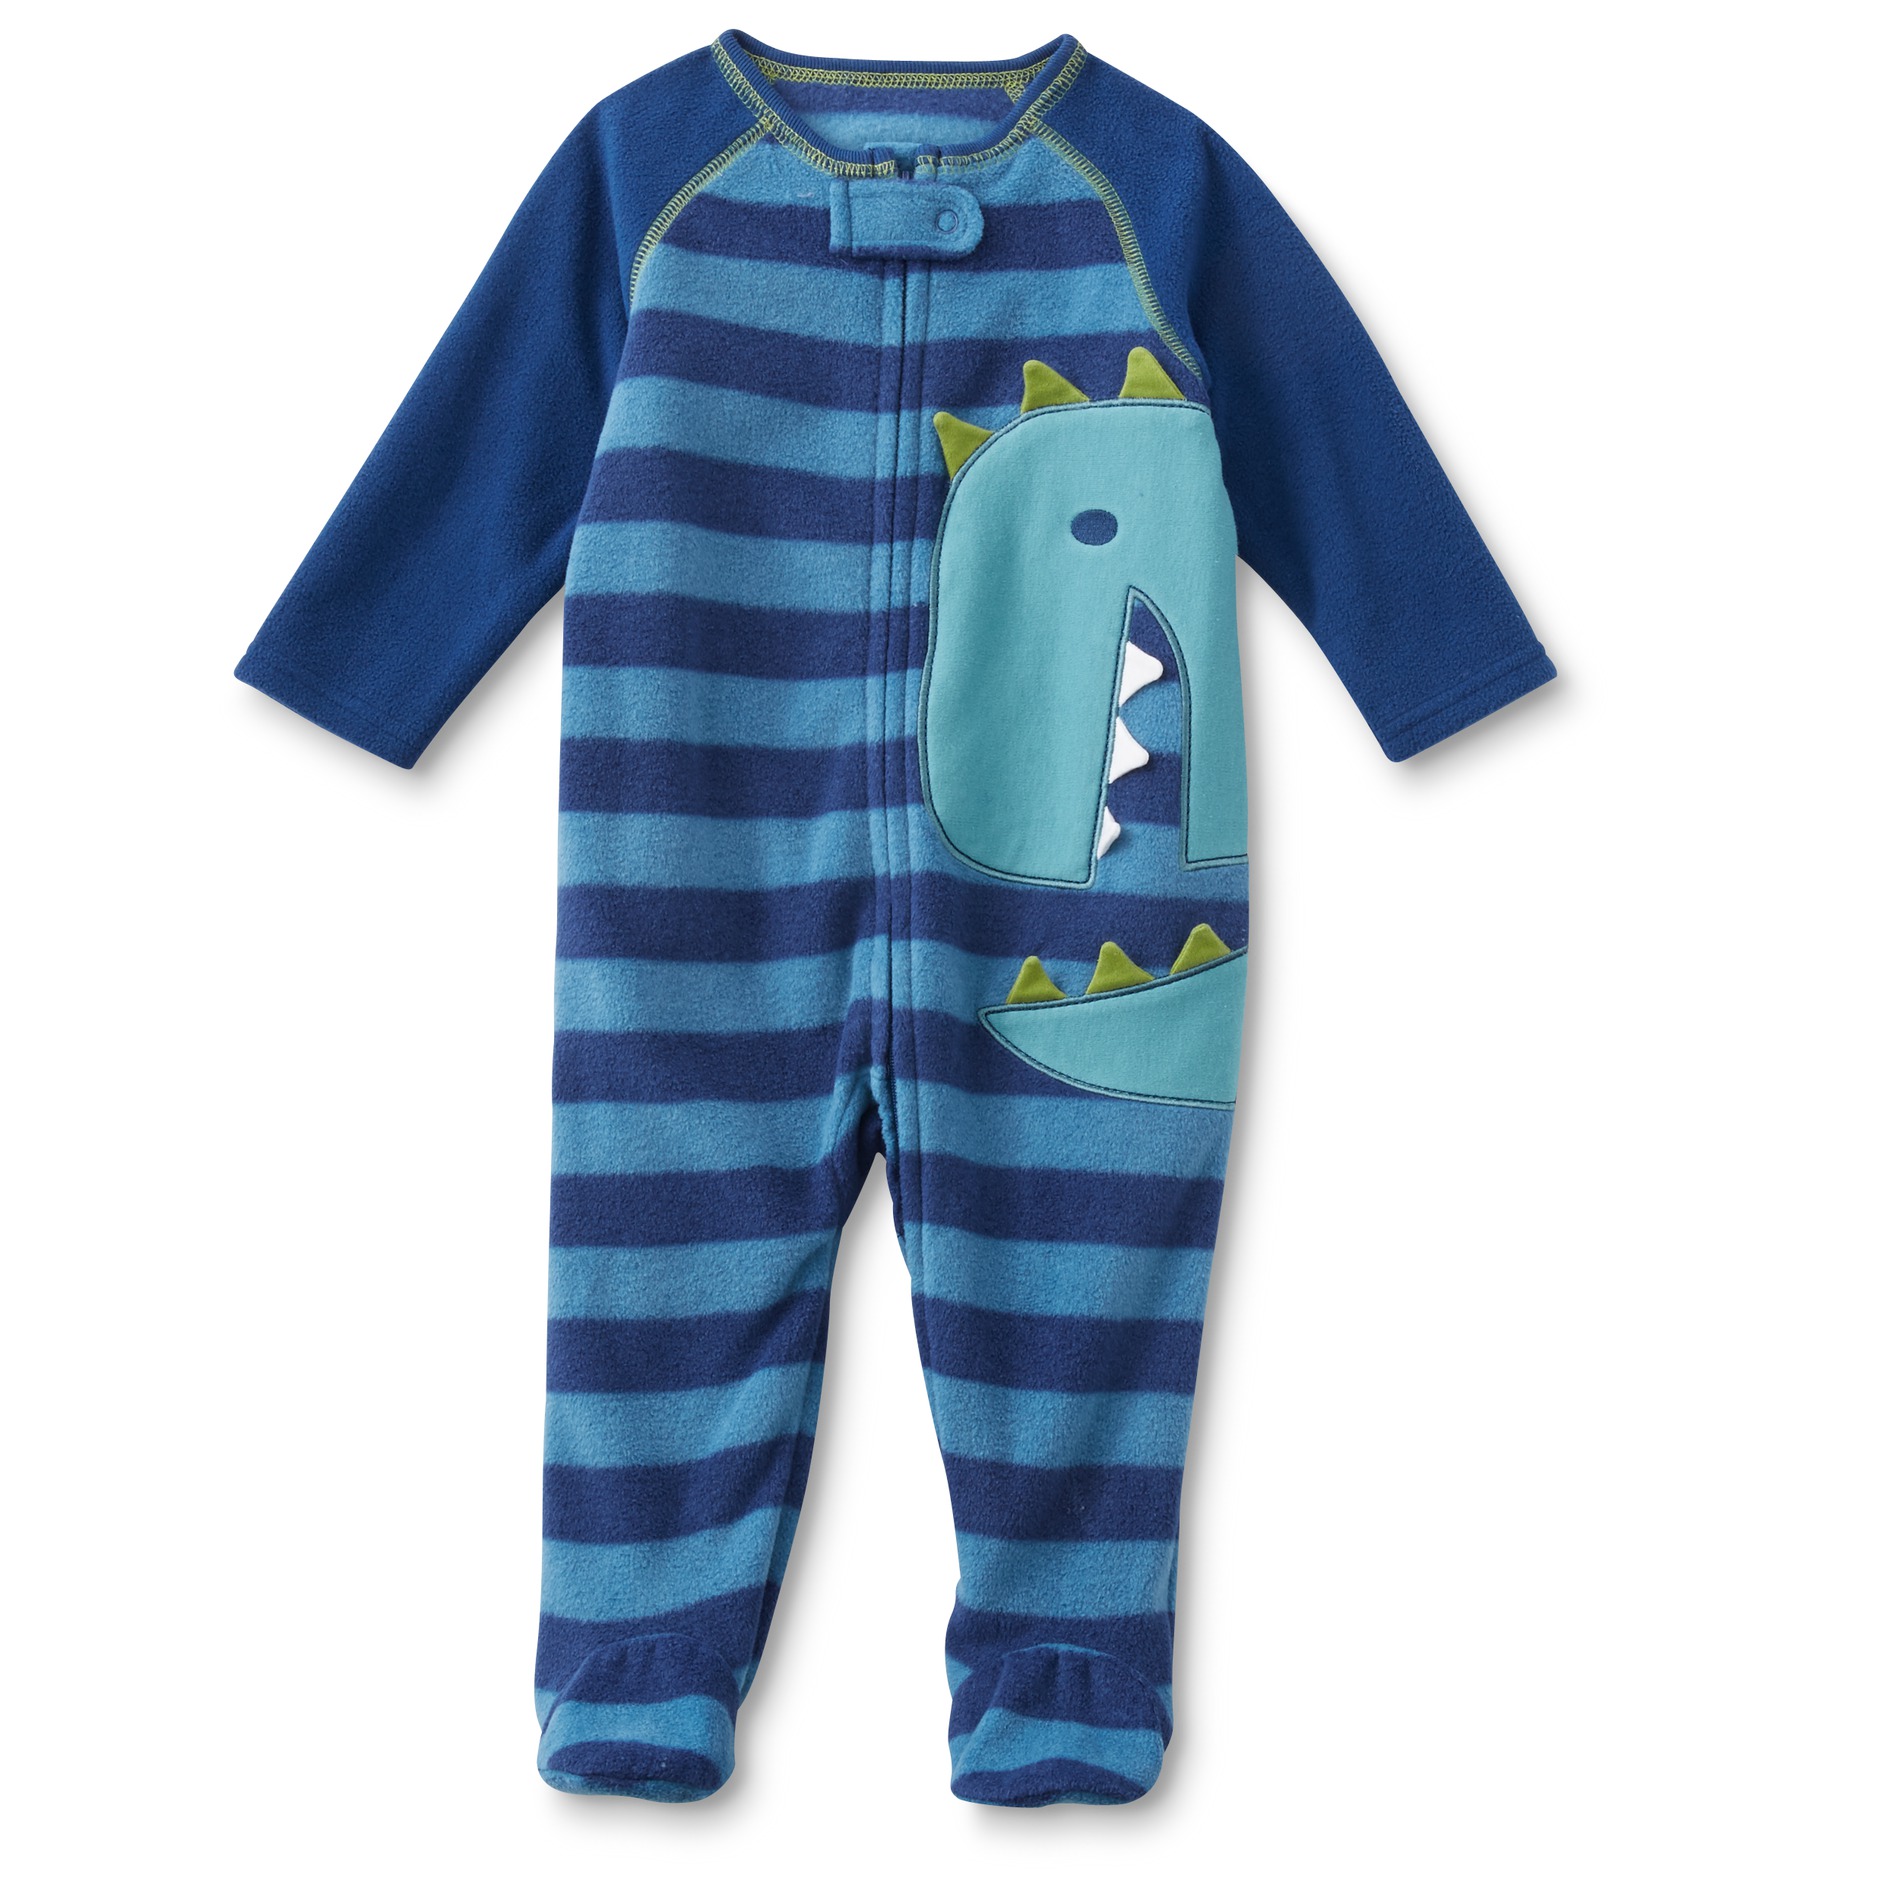 Little Wonders Newborn Boy's Sleeper Pajamas - Dinosaur